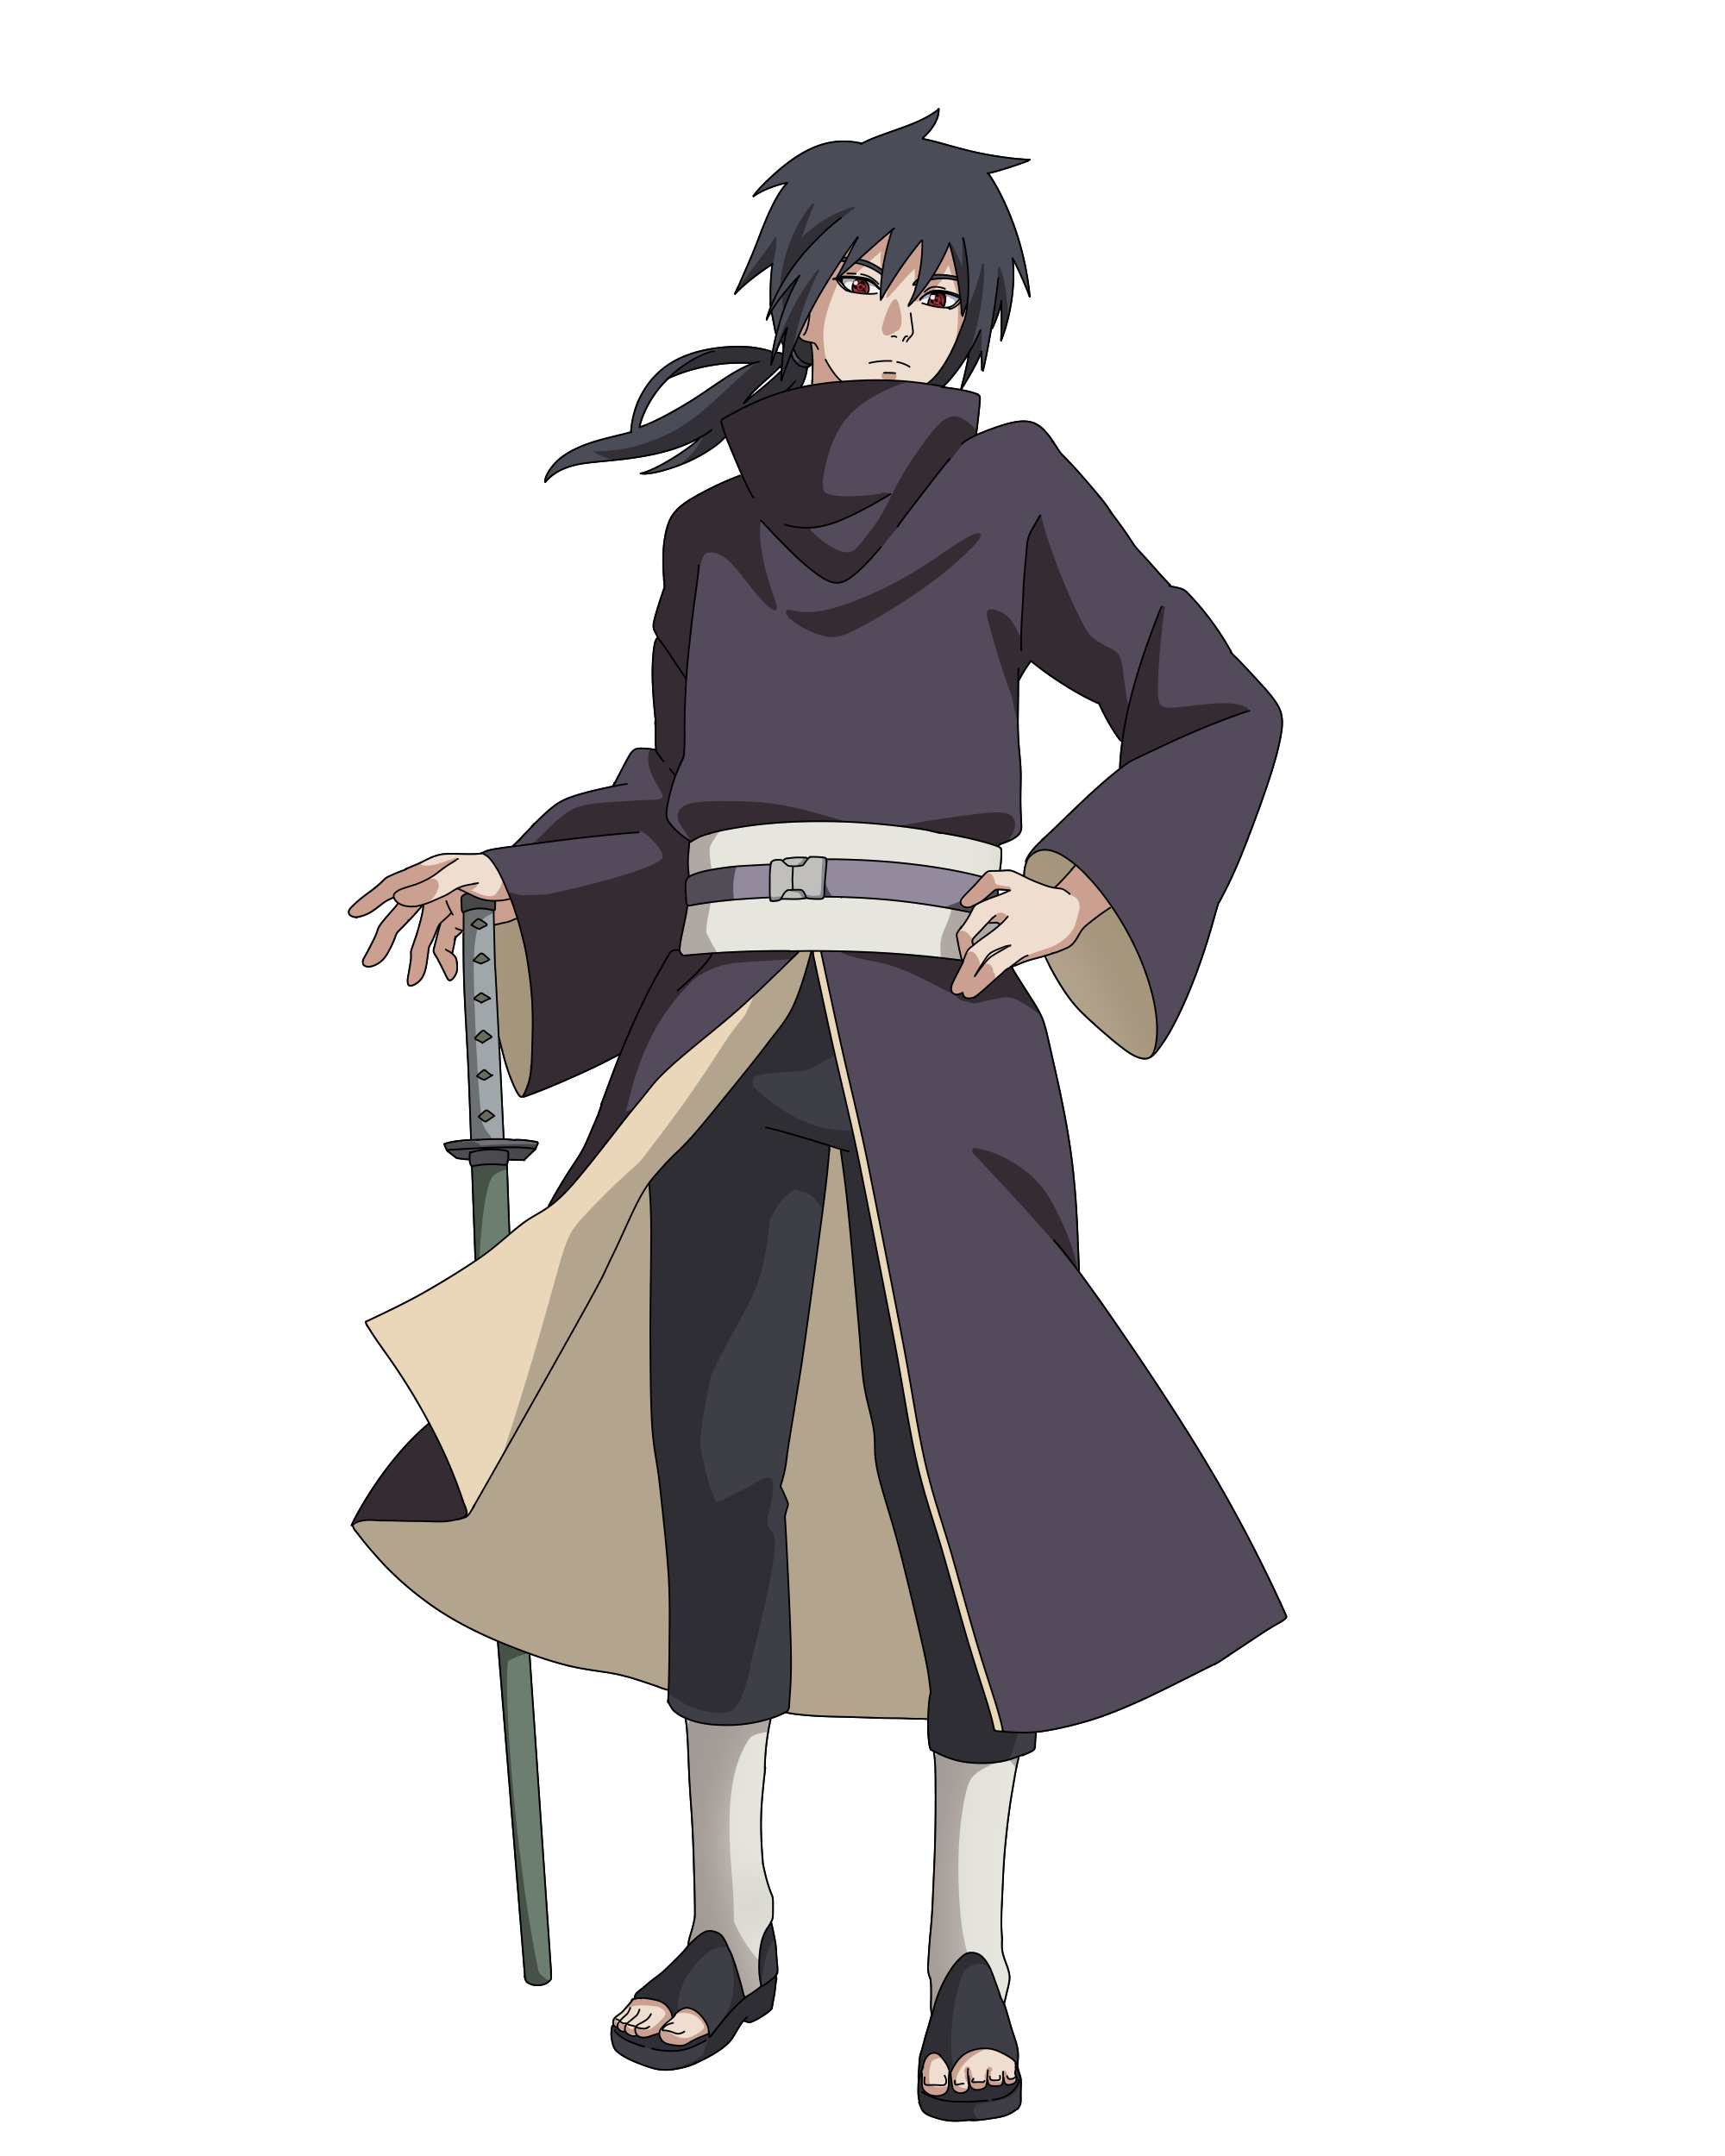 When did Sasuke awaken 3 Tomoe? - Quora